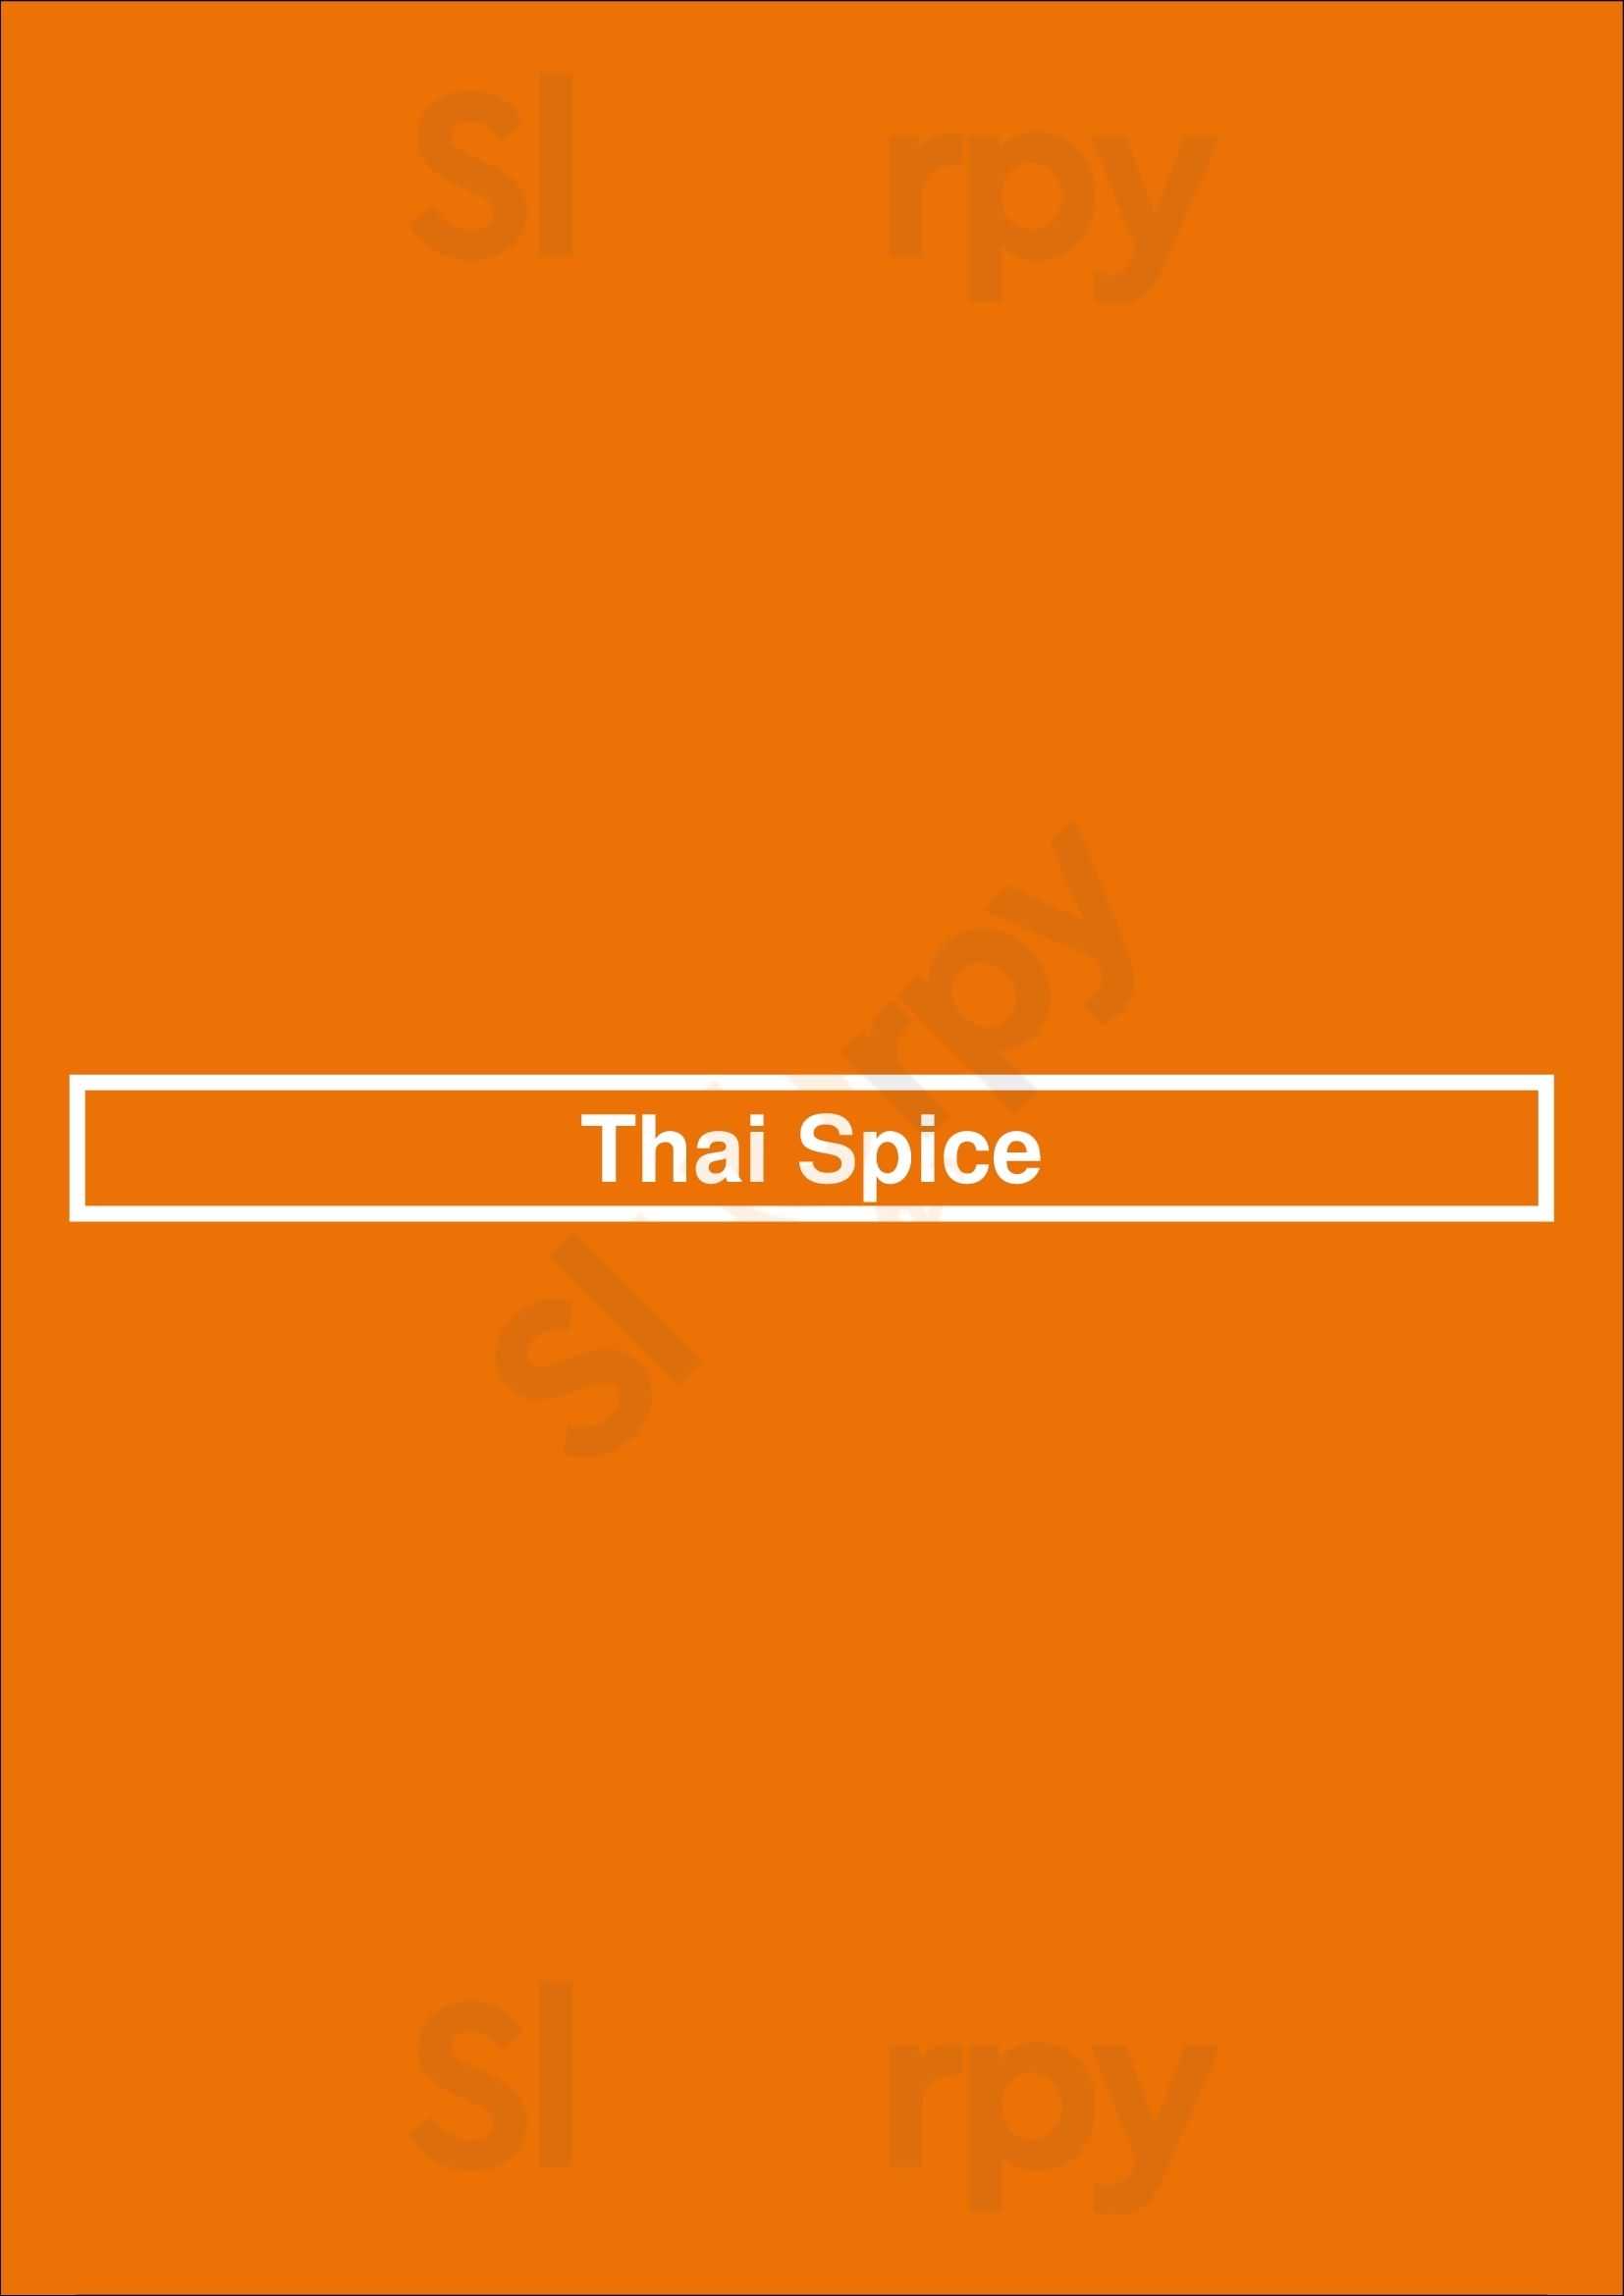 Thai Spice Boston Menu - 1